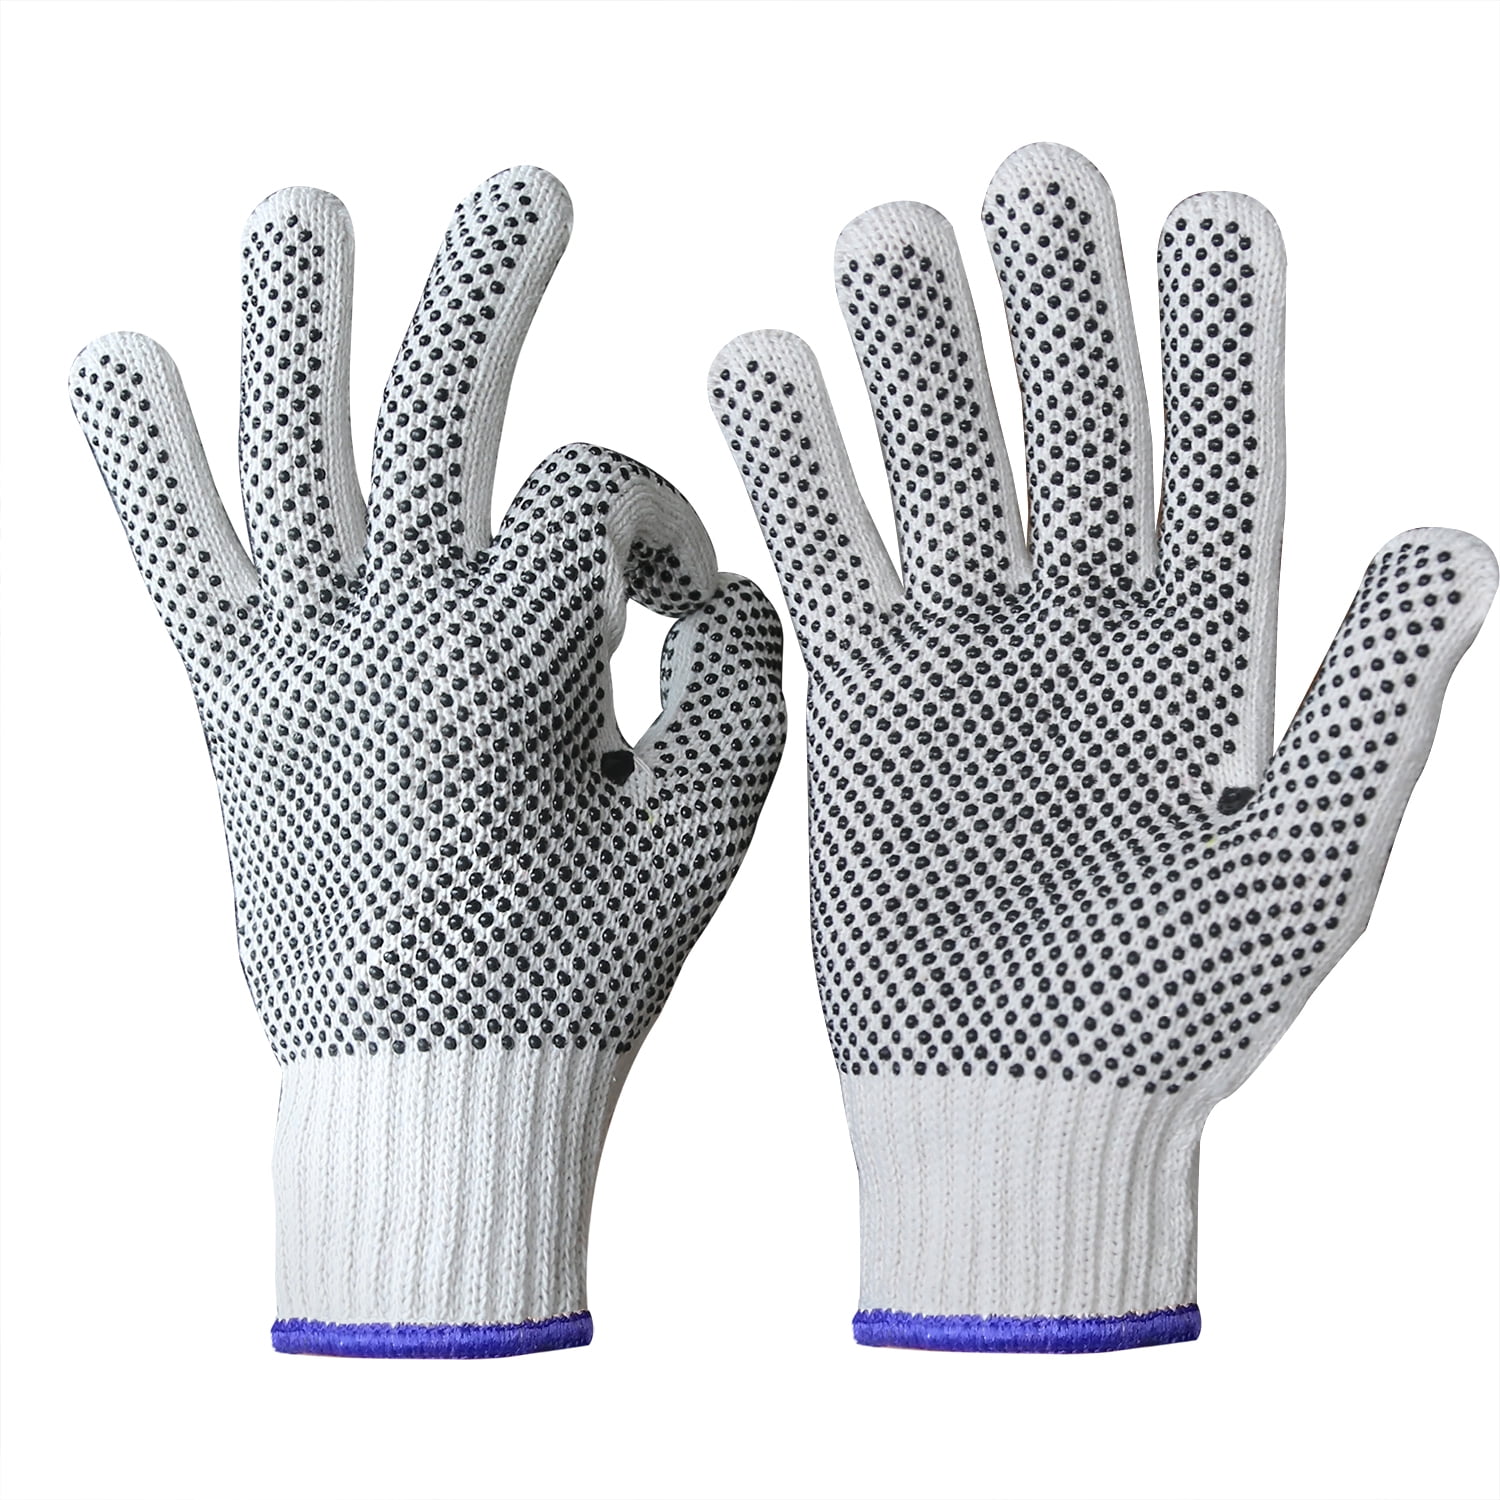 Picking Packing PVC POLKA DOT Nylon Work Gloves size Small/7 Ladies warehouse 